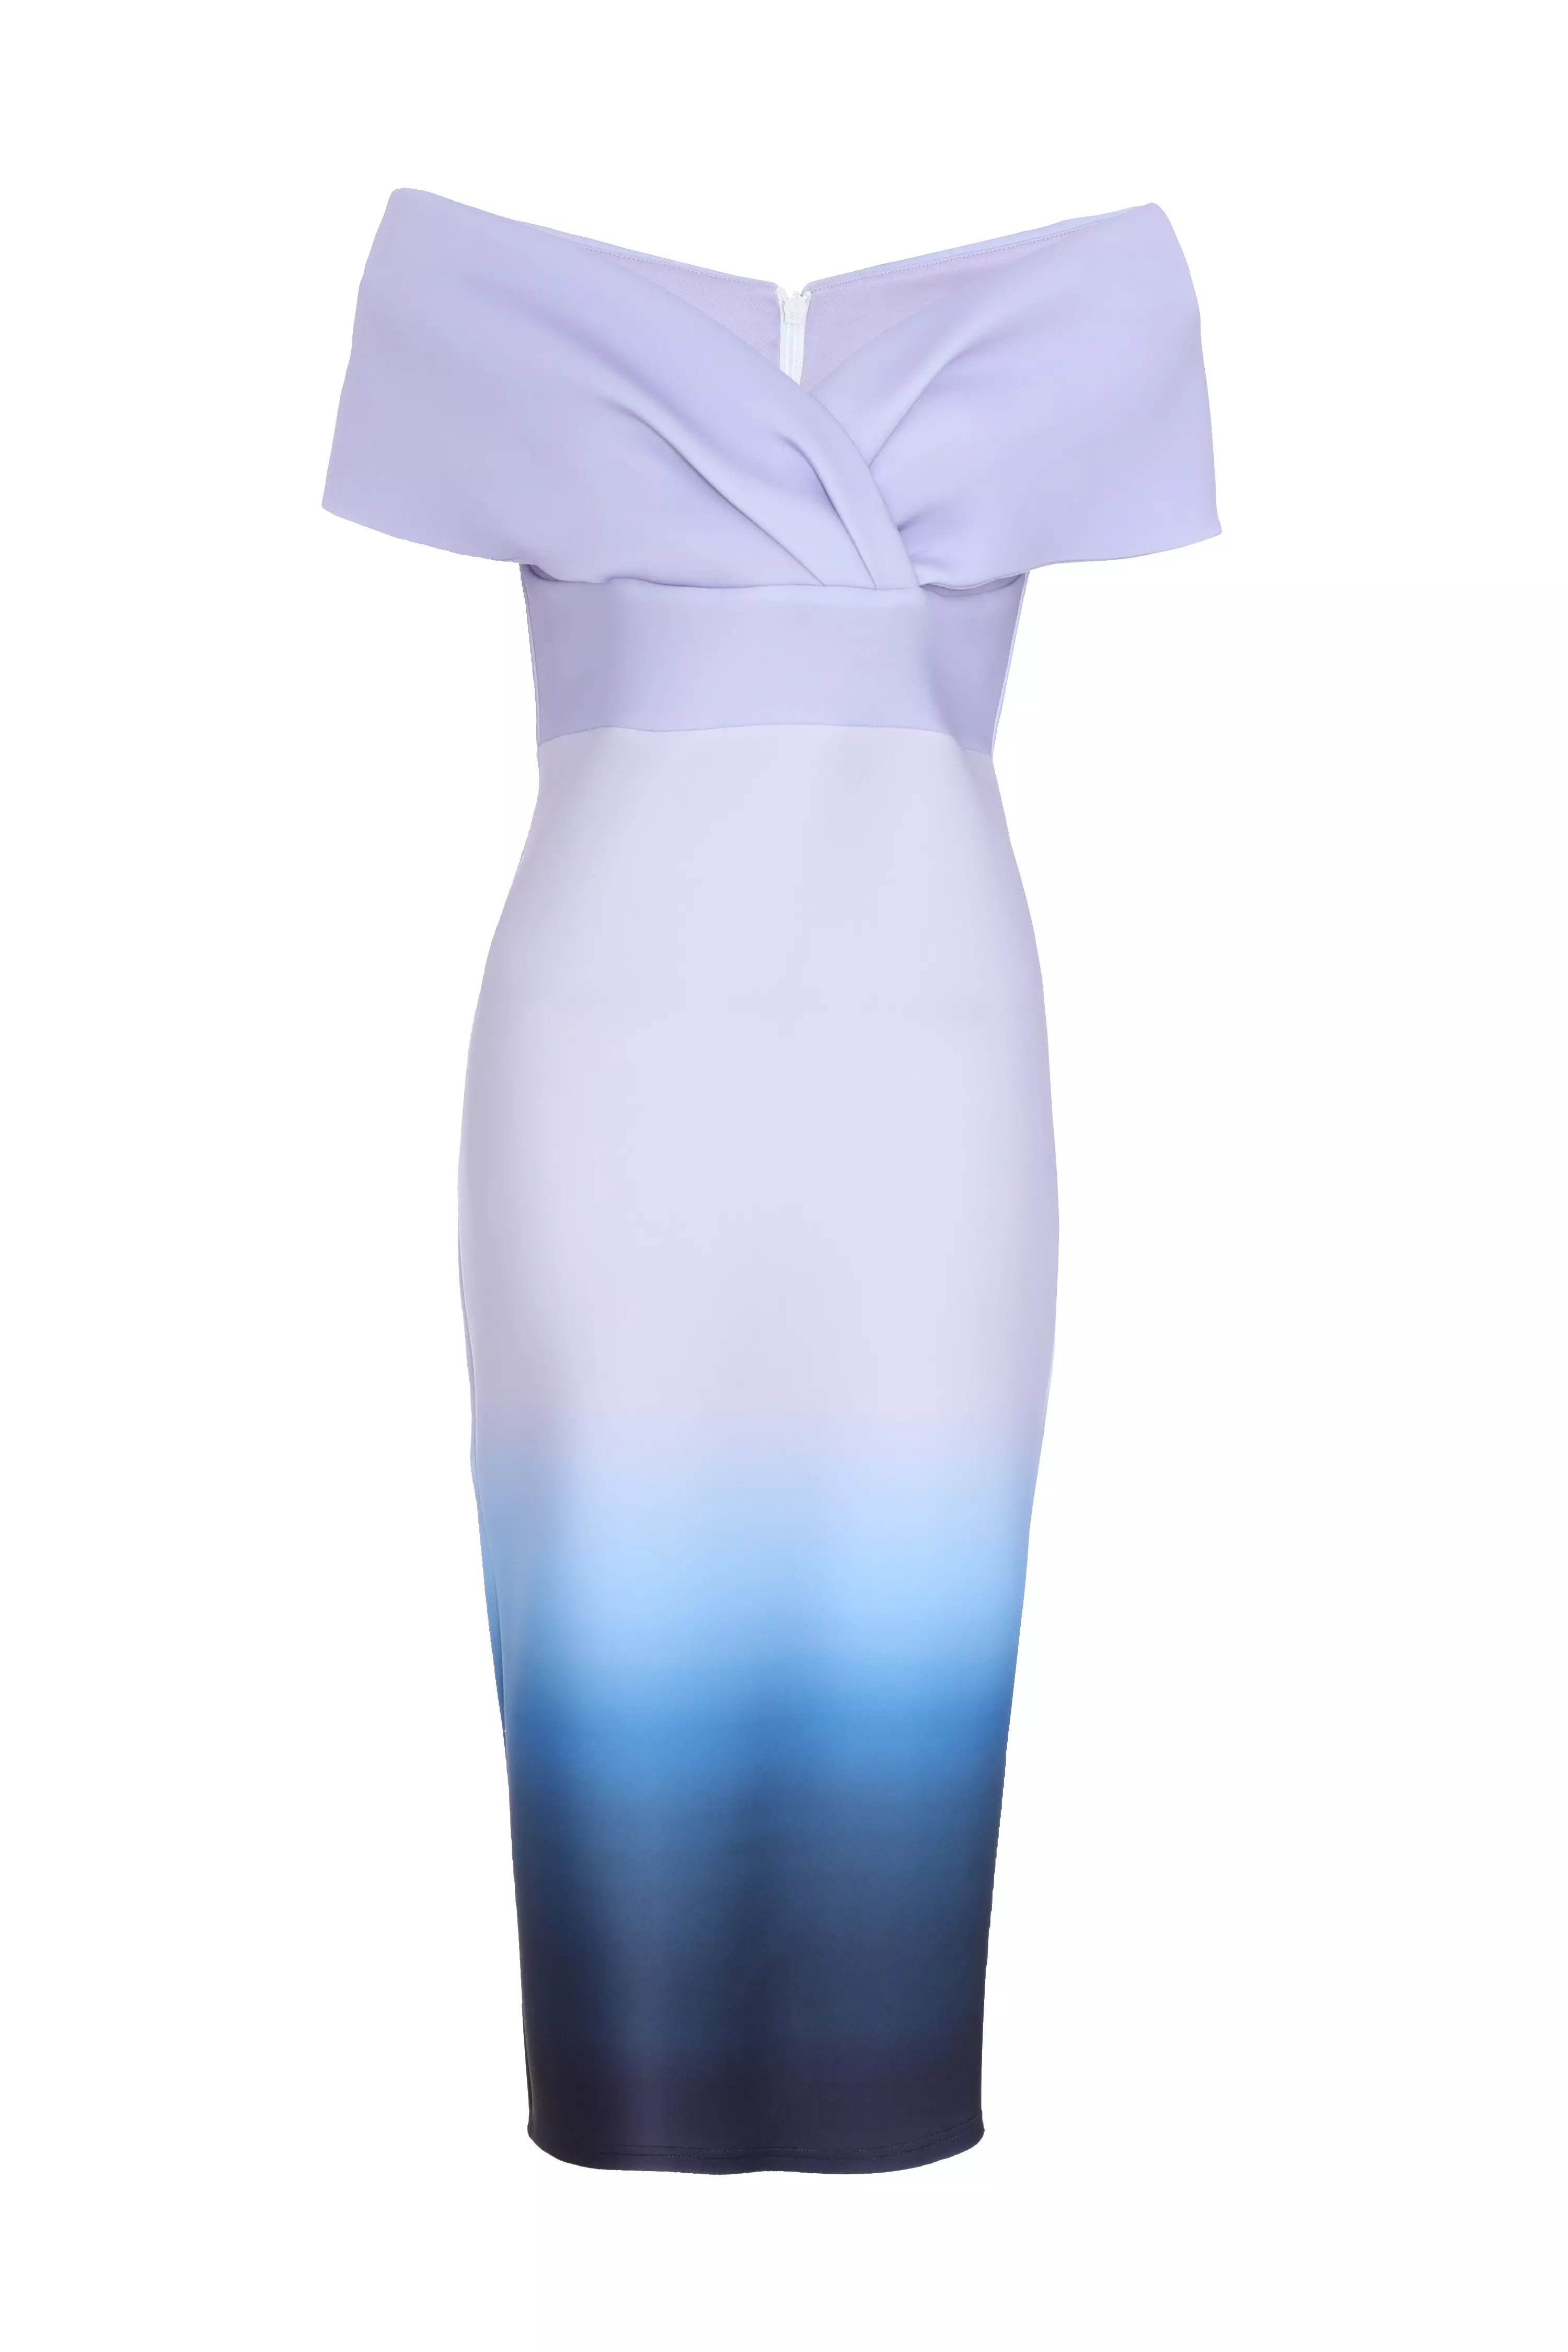 Blue Ombre Bardot Ruched Midi Dress